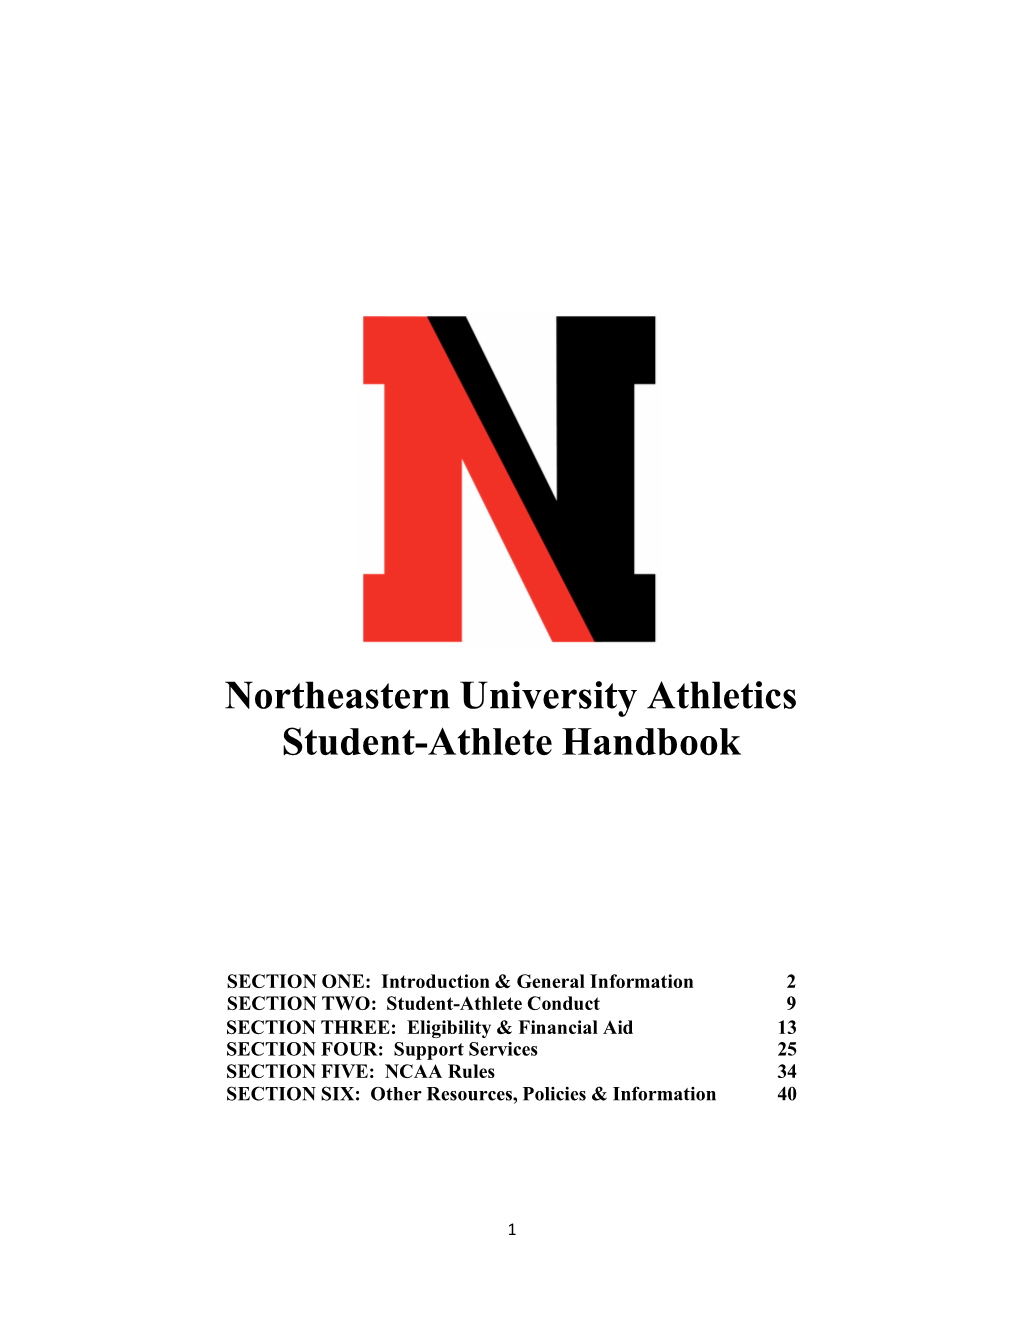 Northeastern University Athletics Student-Athlete Handbook